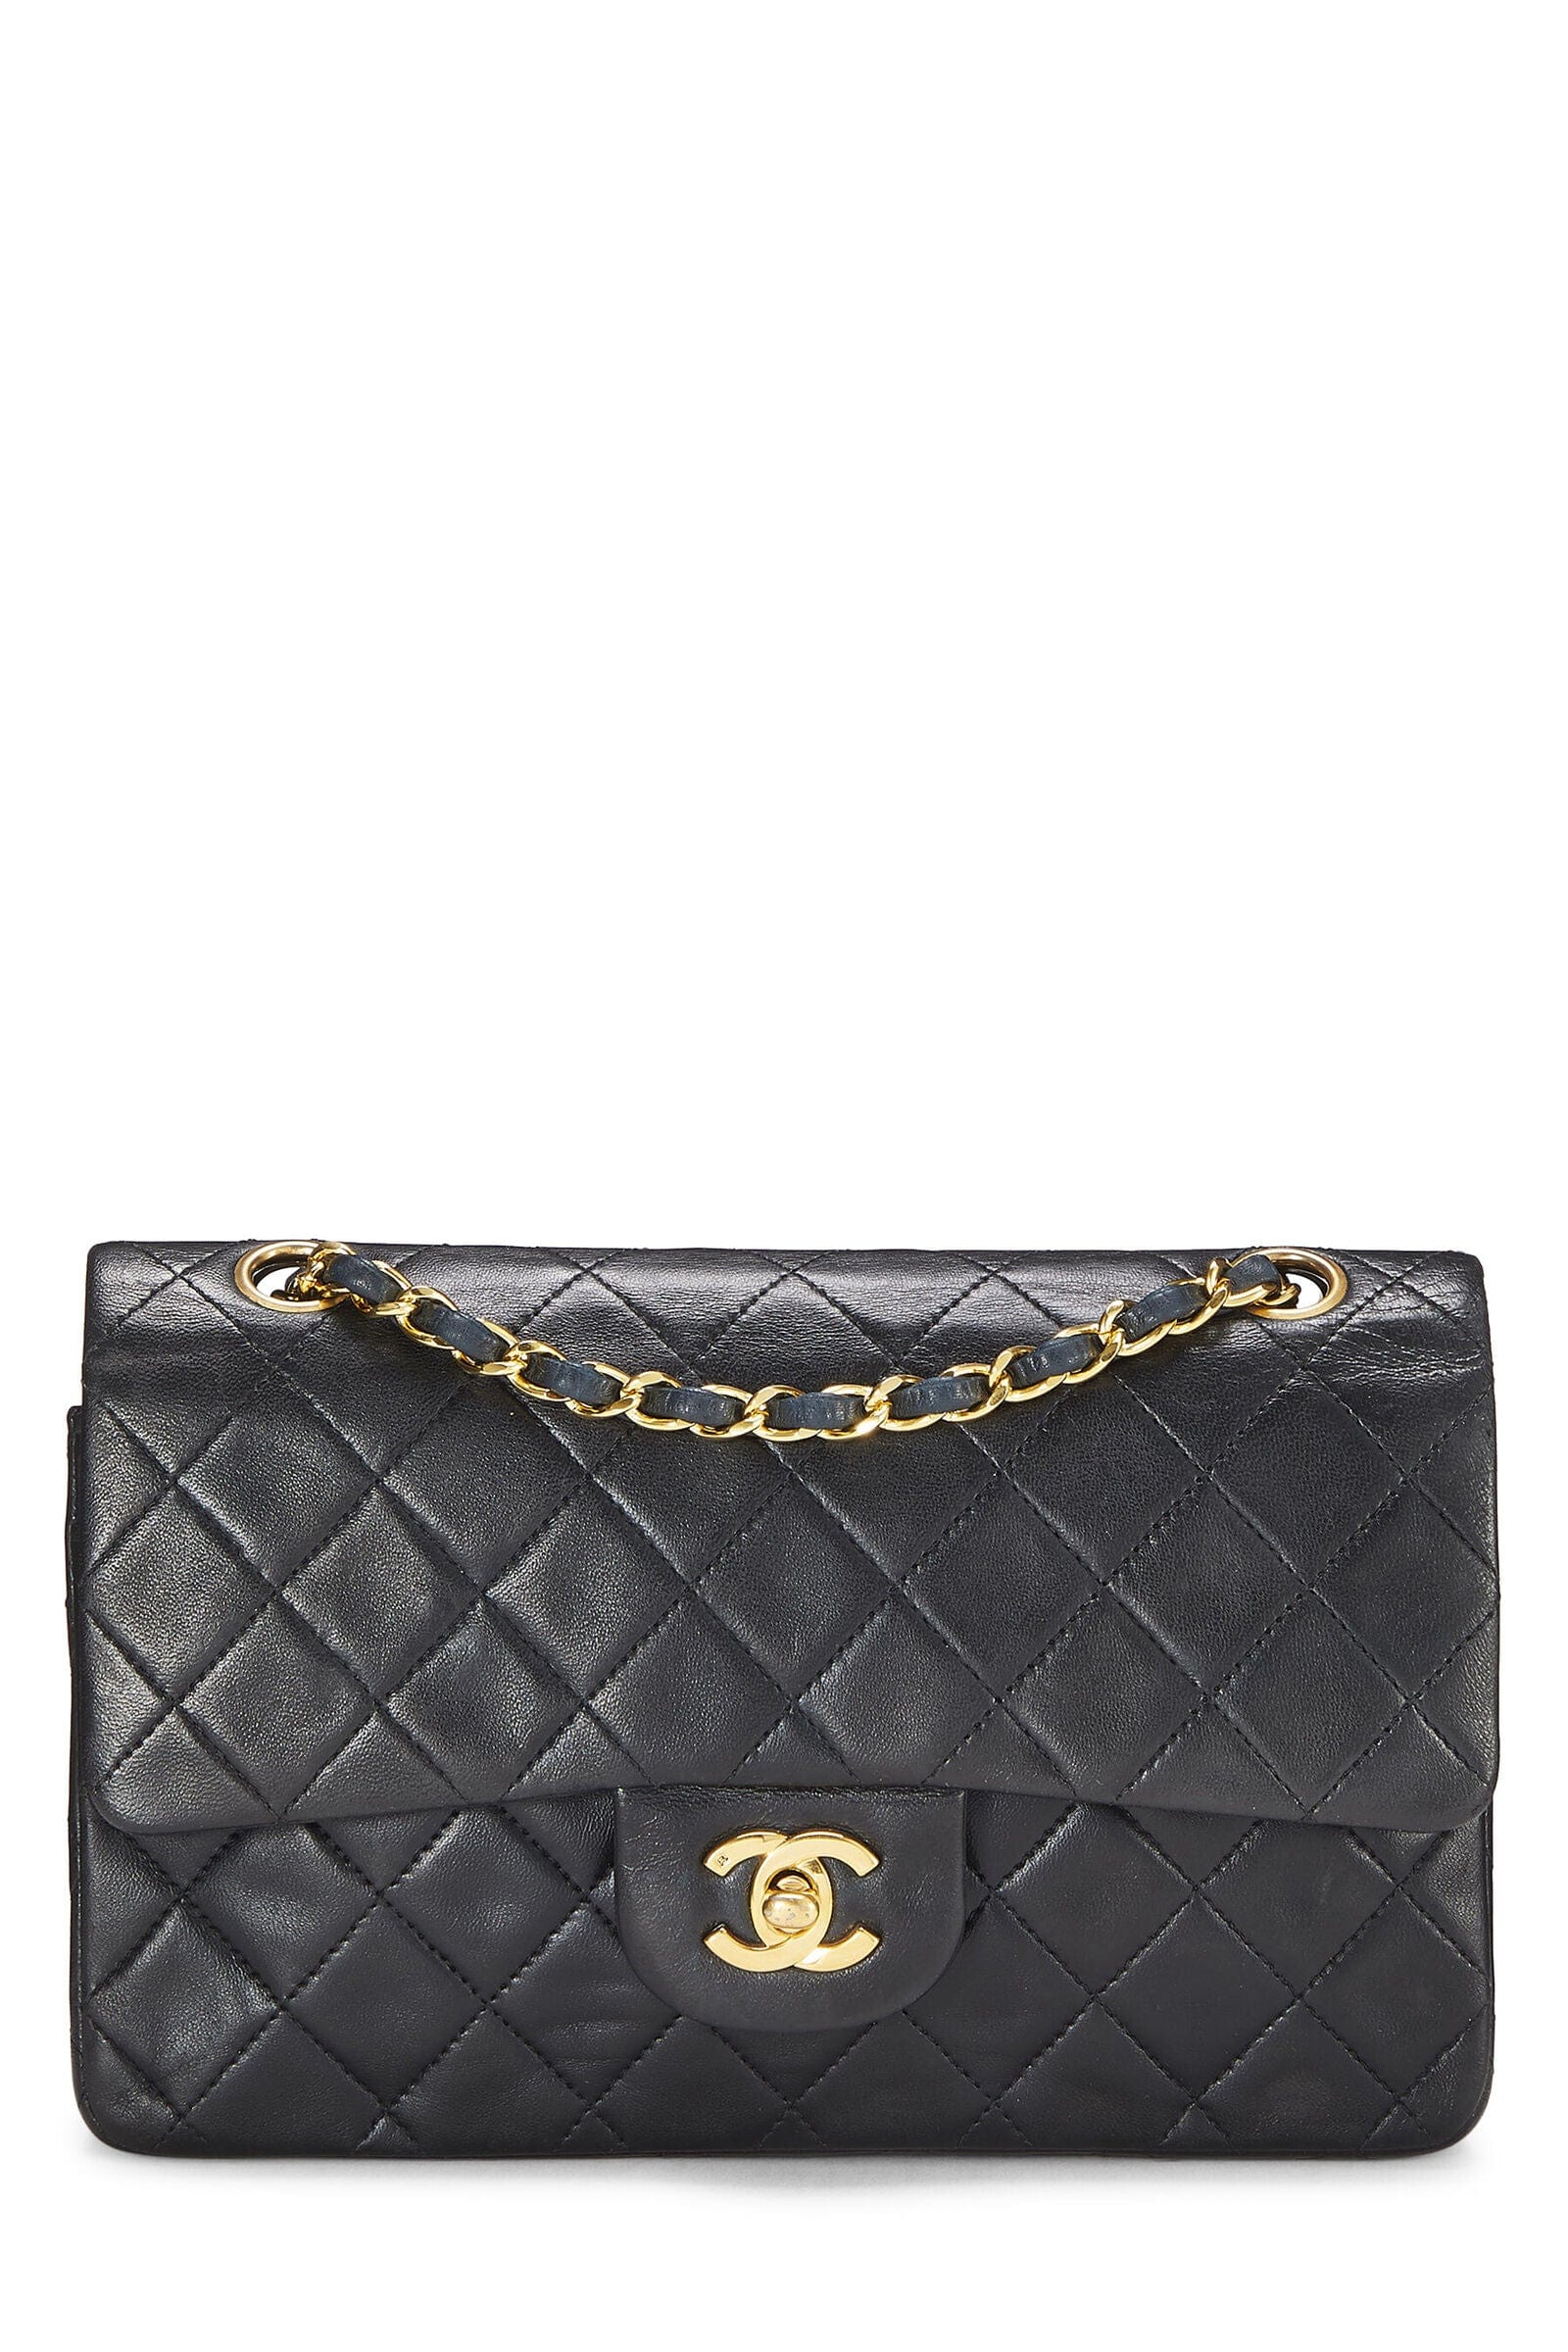 Chanel Chanel Black Lambskin 2.55 9" Q6B0101IK1766